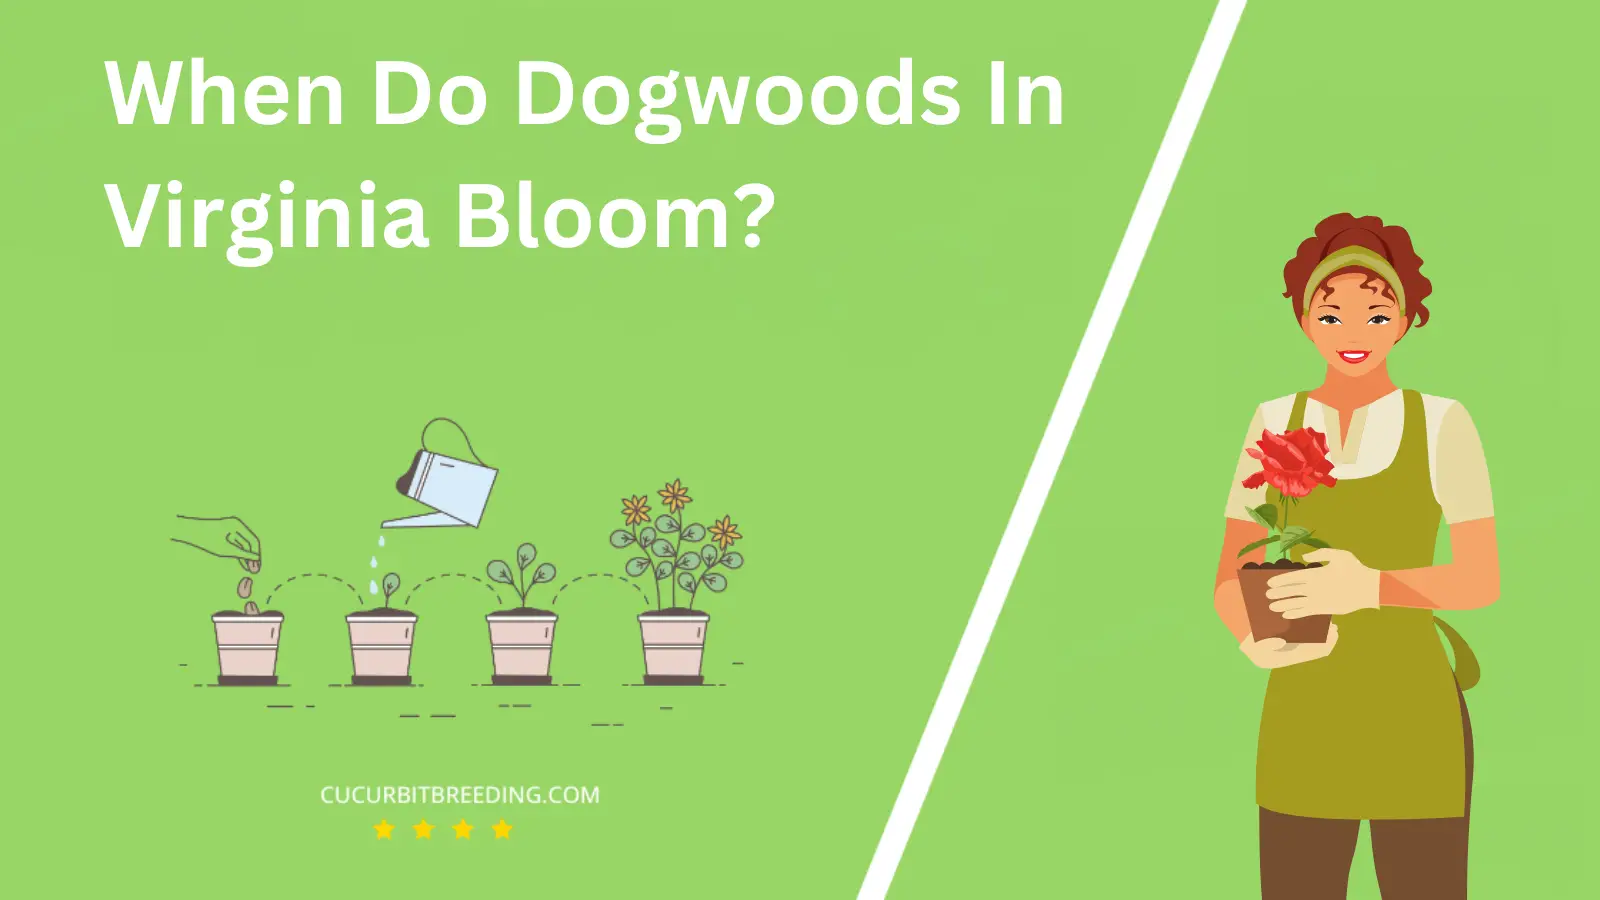 When Do Dogwoods In Virginia Bloom?